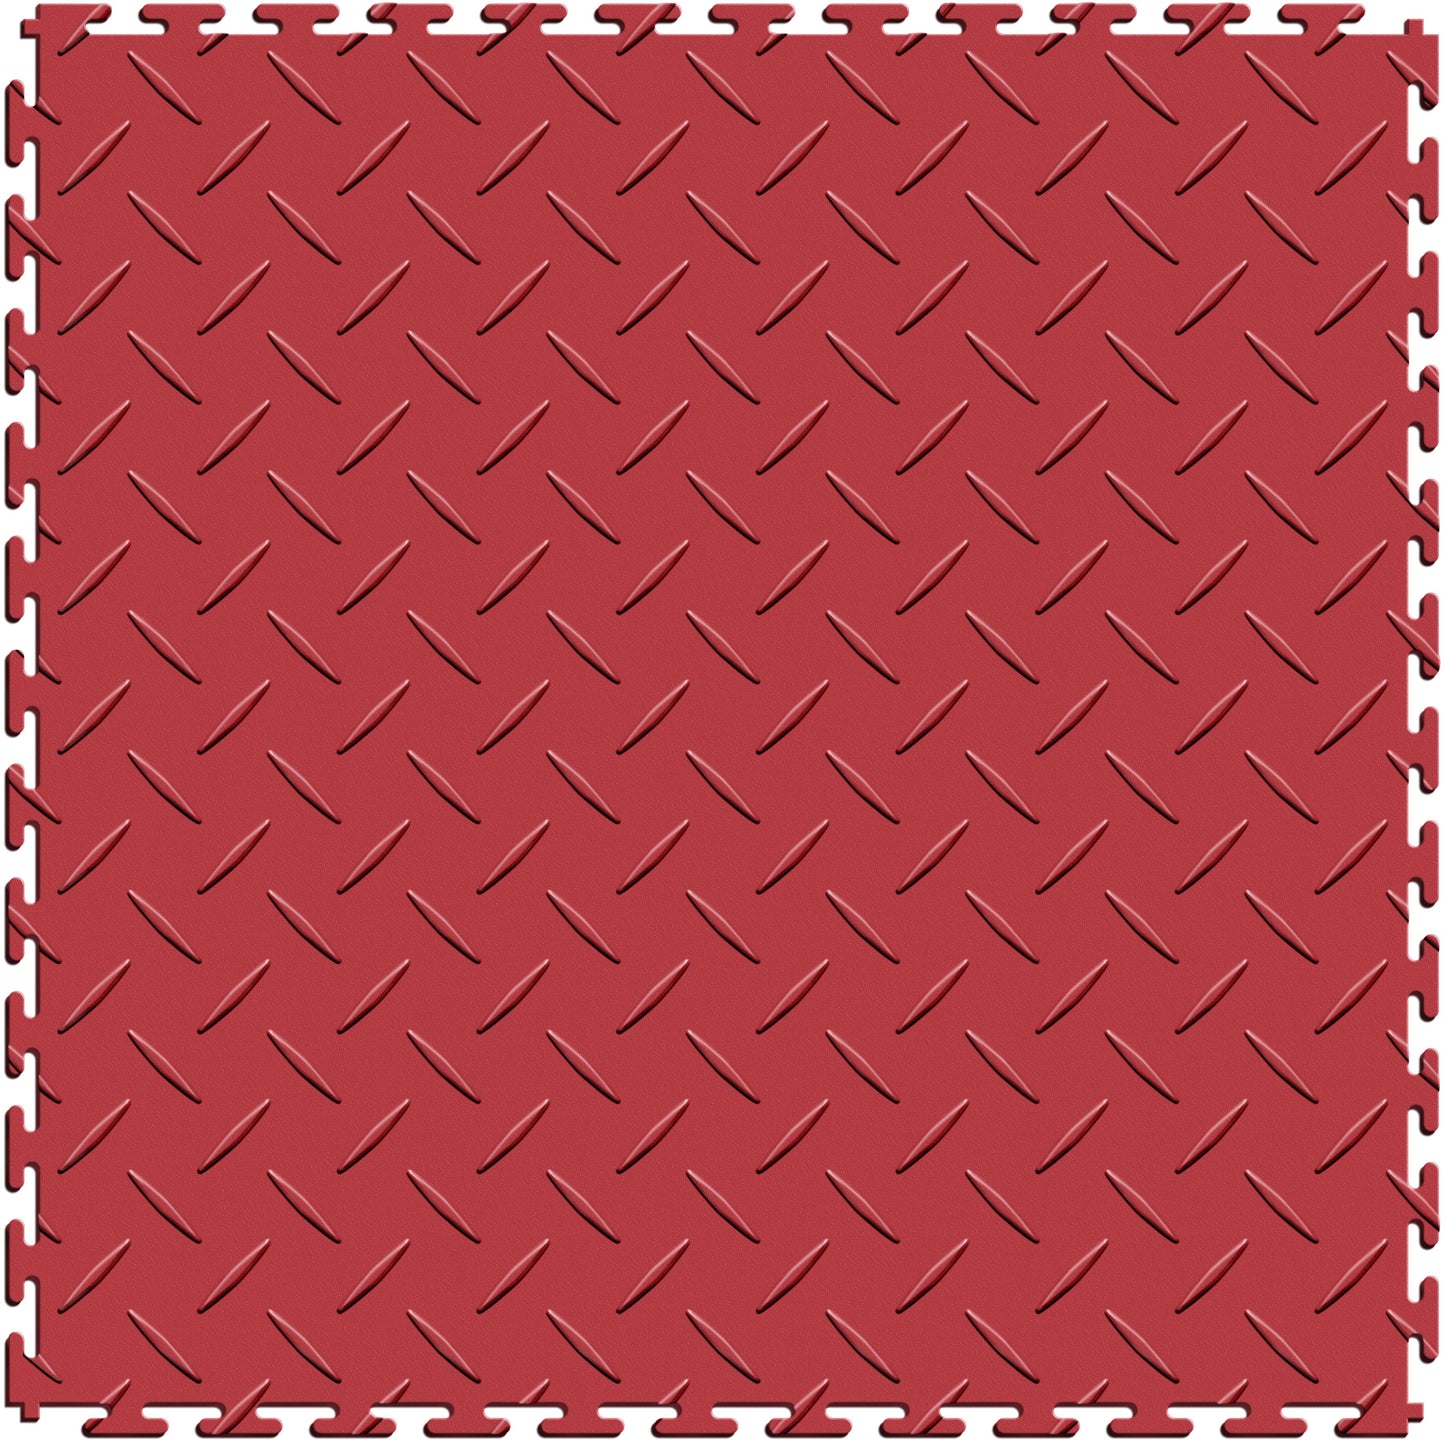 Red Diamond Plate Tile Case